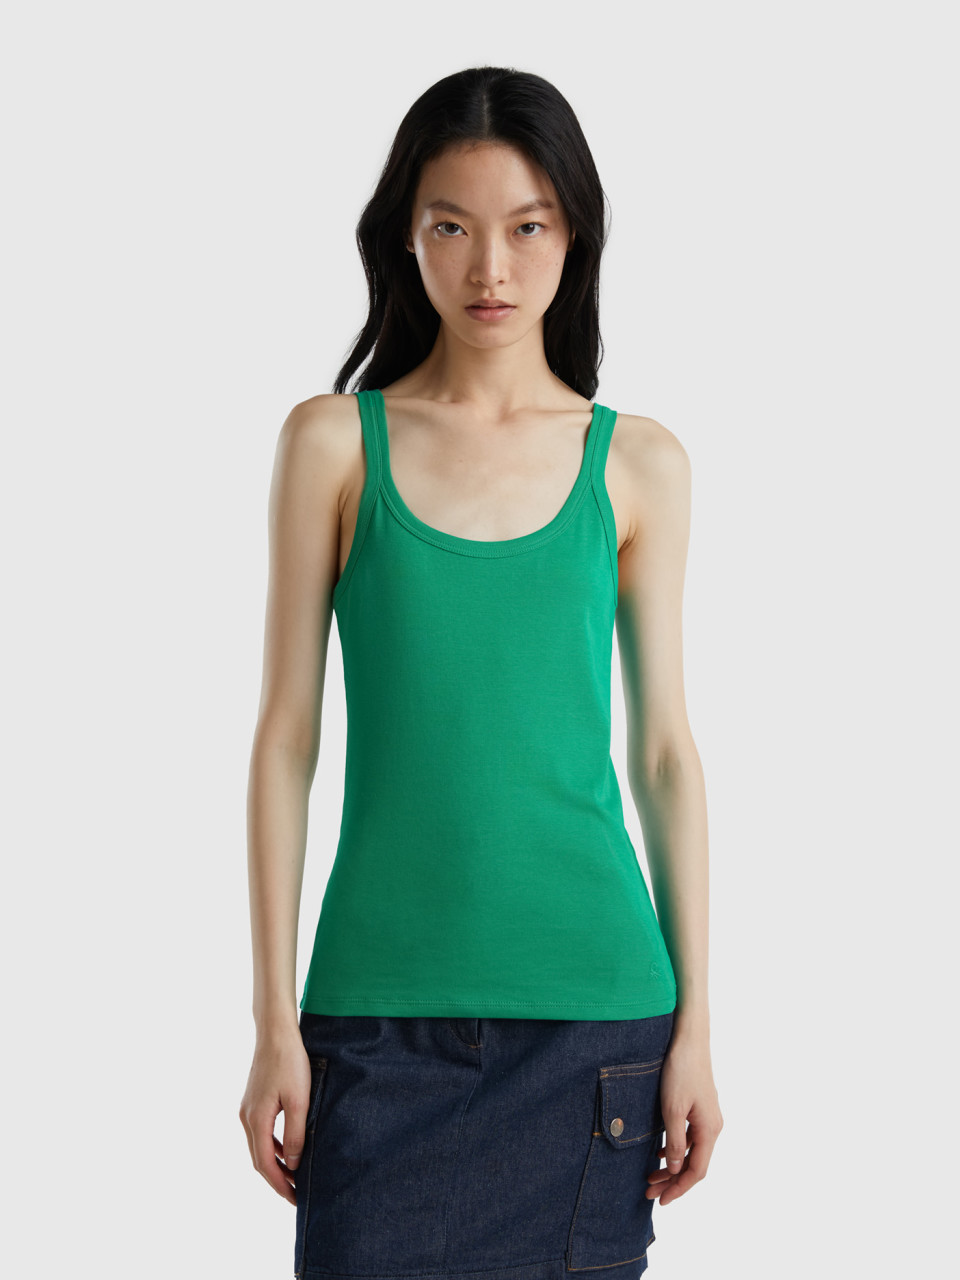 Benetton, Camiseta De Tirantes Verde De 100 % Algodón, Verde, Mujer